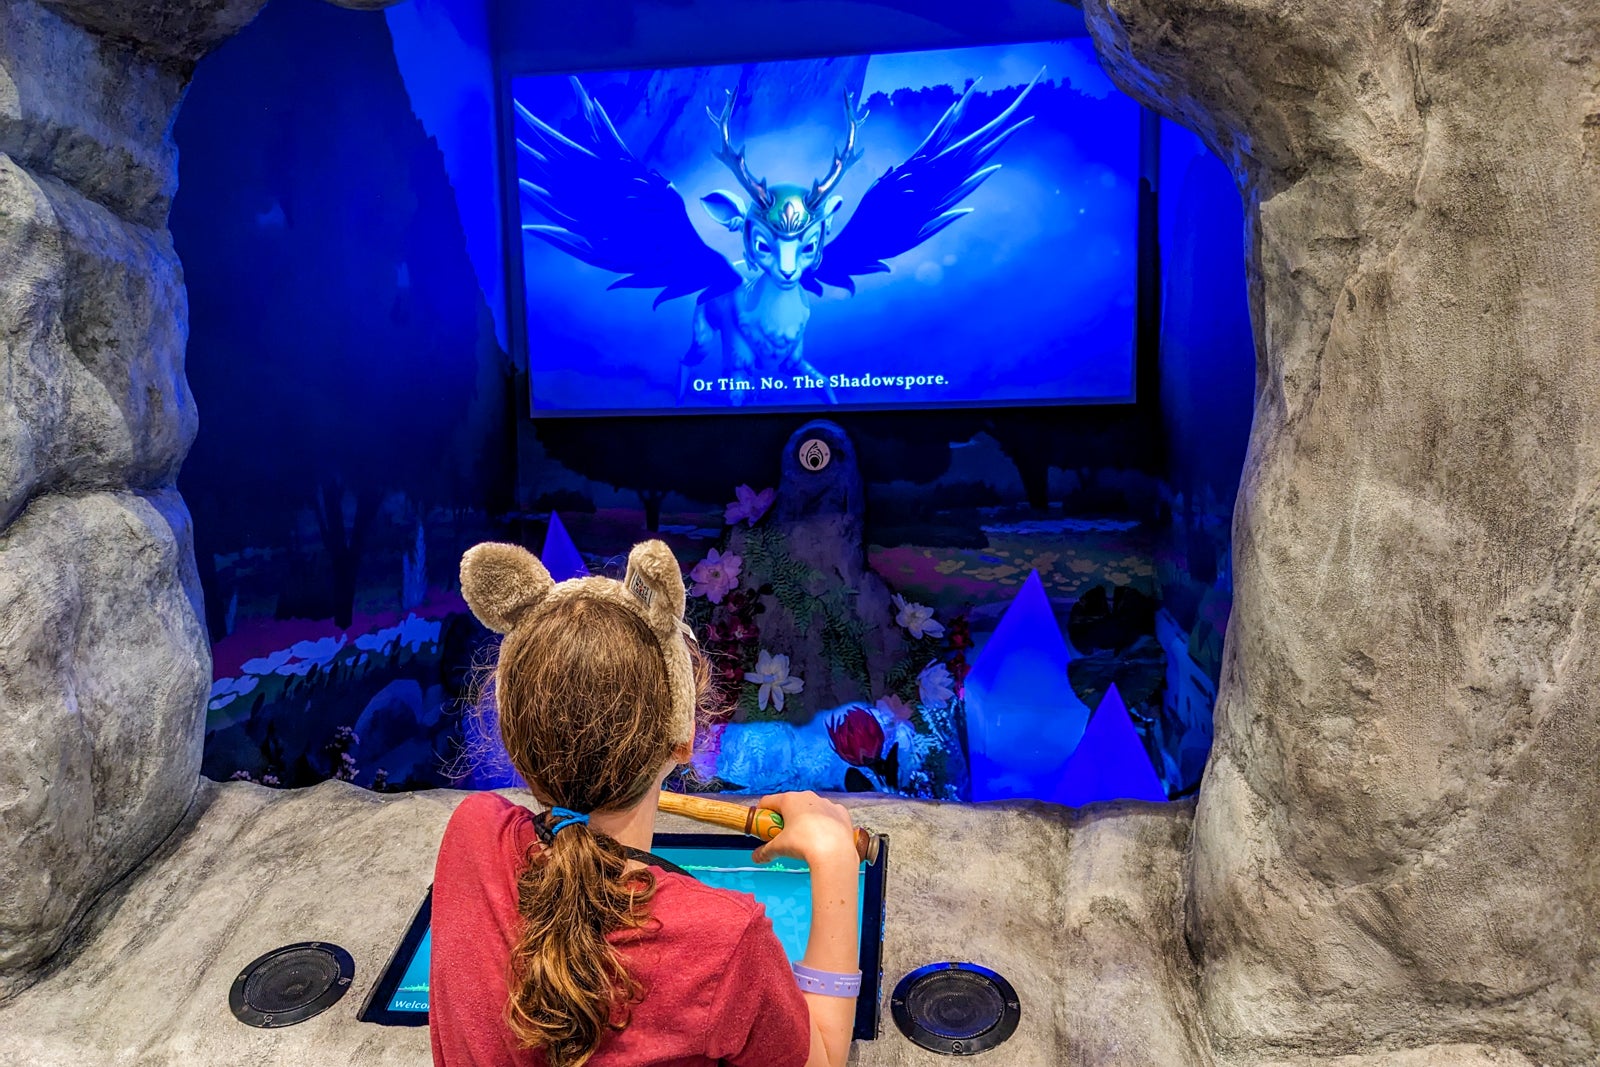 Girl wearing wolf ears headband watching animated characters on a screen